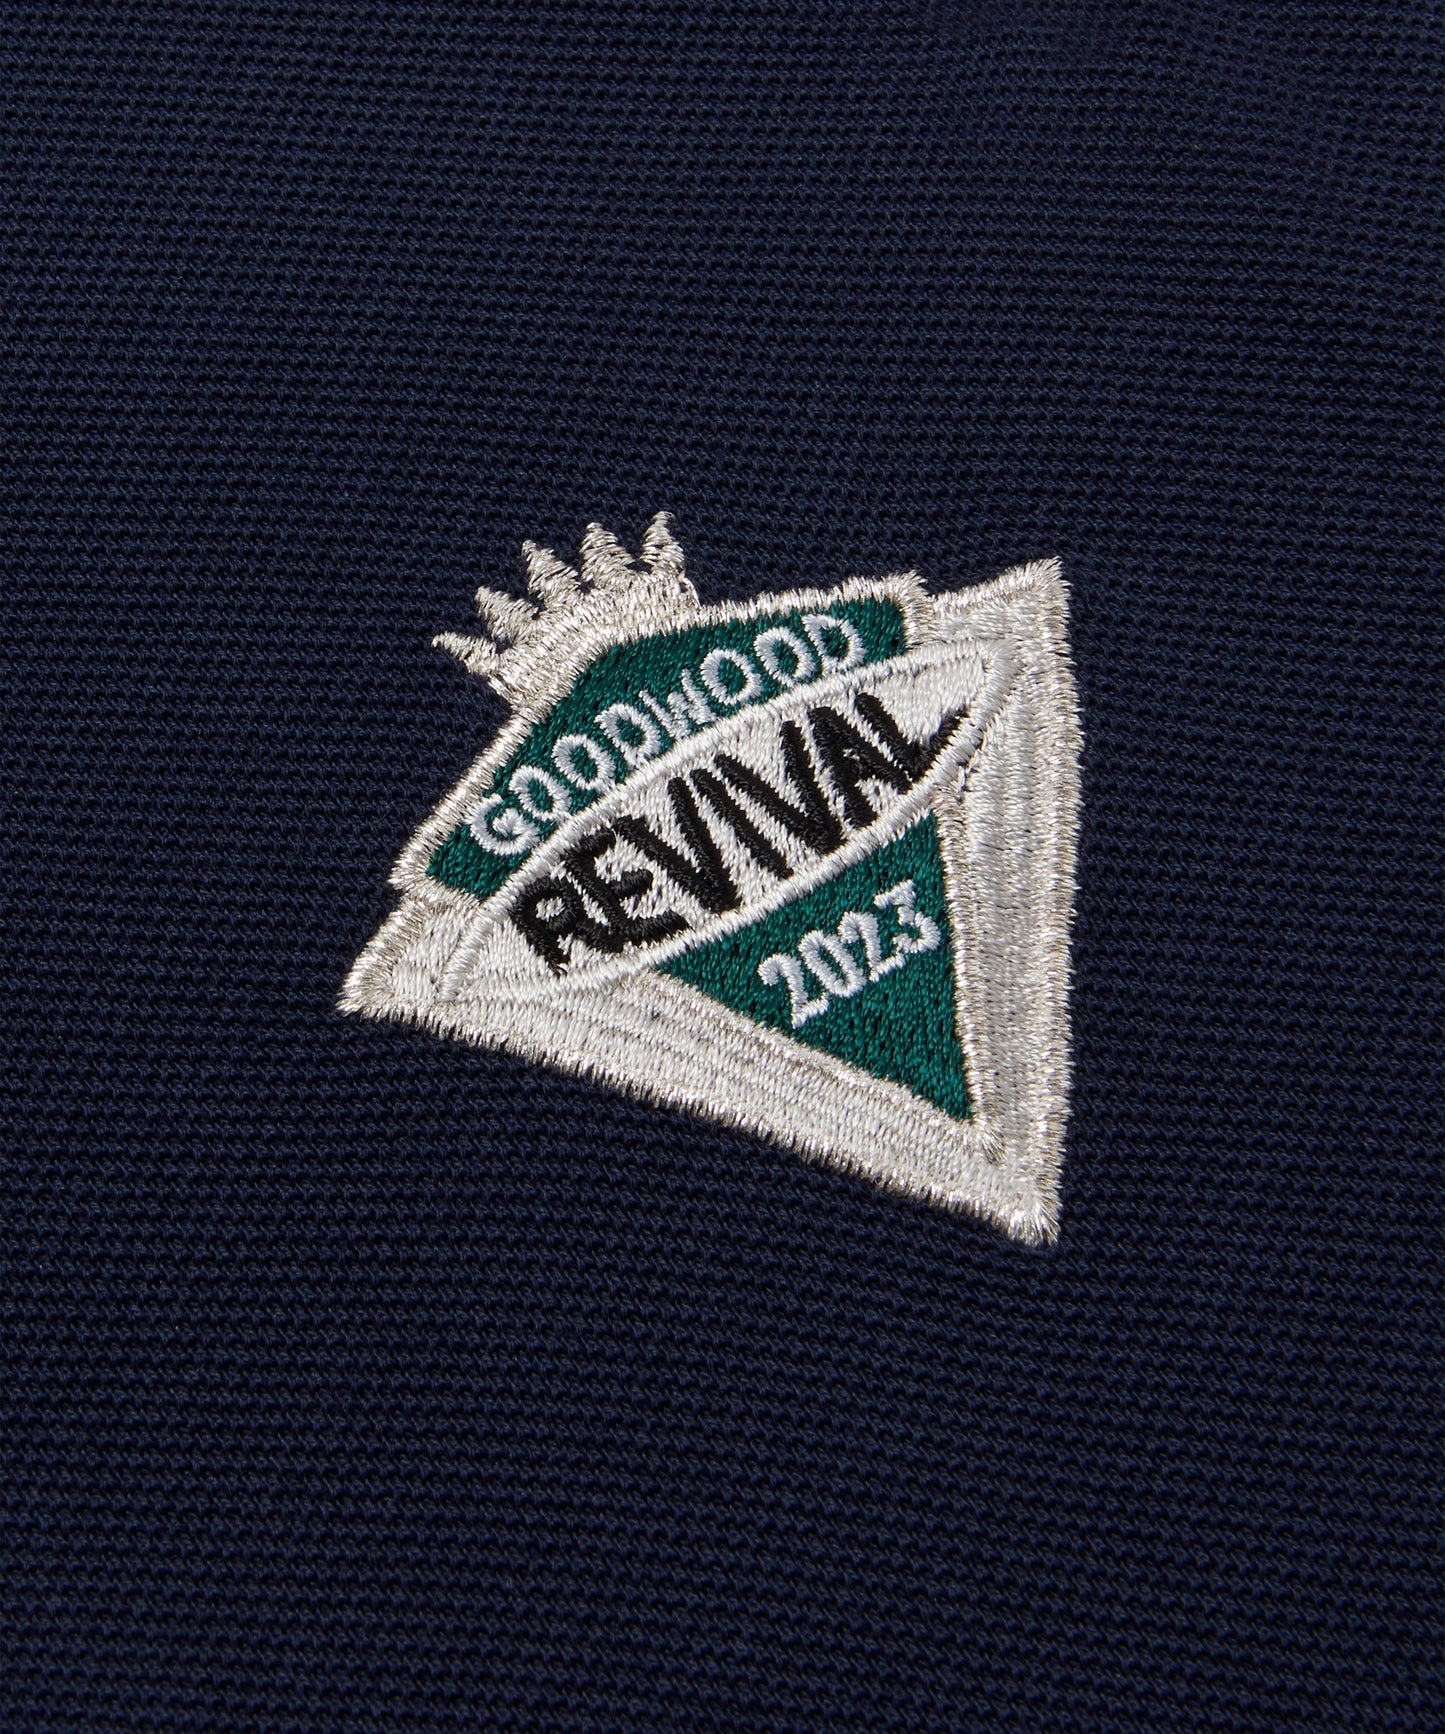 Goodwood Revival 2023 Medal Polo Shirt